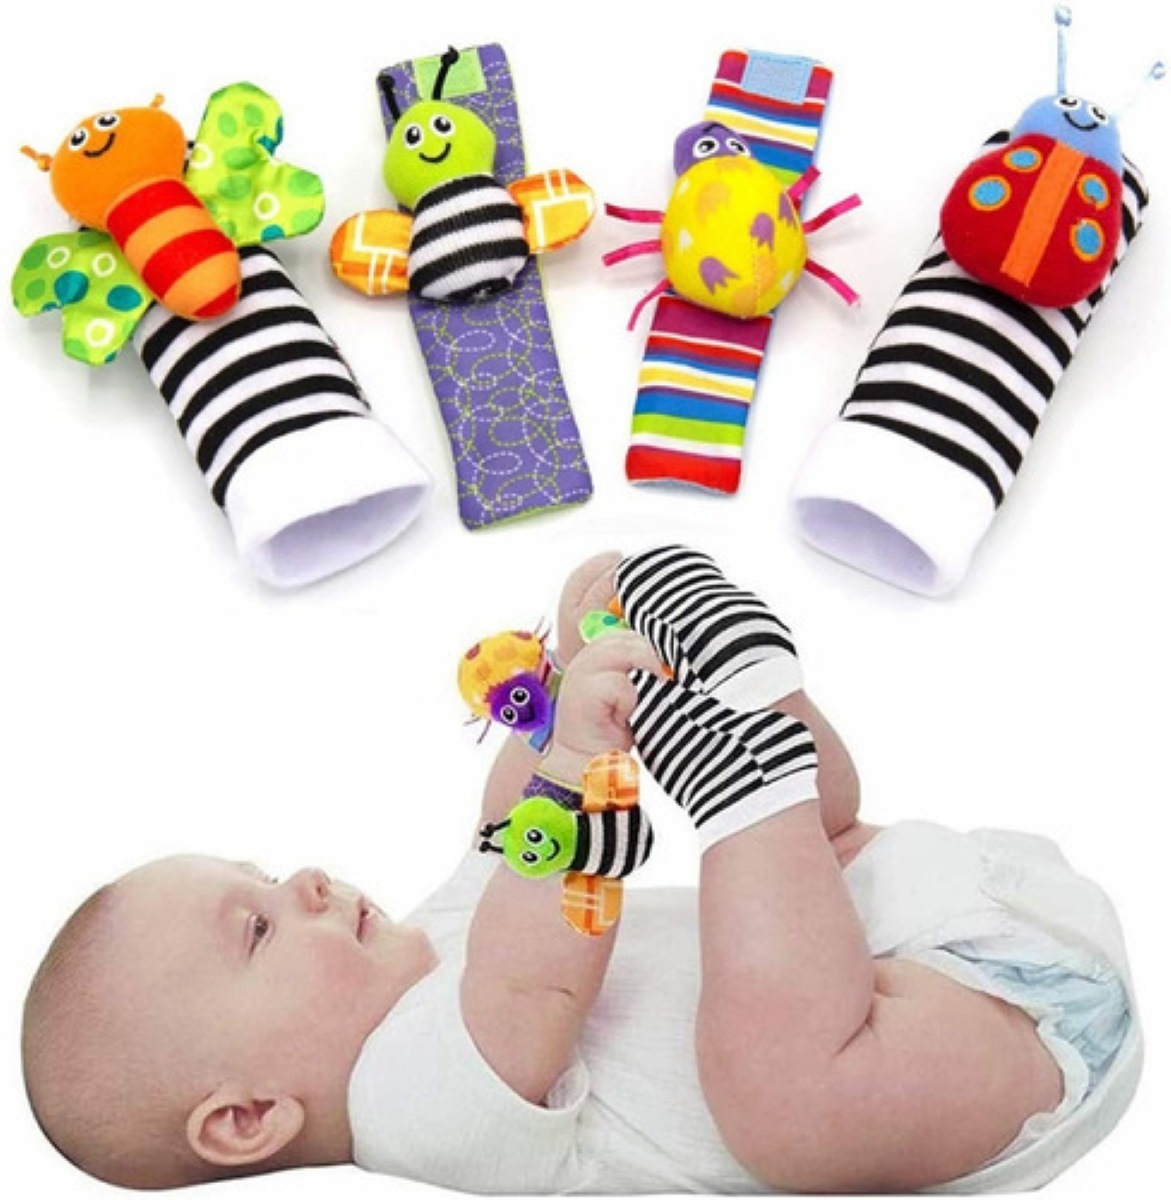 Juguetes para bebés de 0 a 12 meses Calcetines para niños bebés Correa de  muñeca Sonajeros de juguete Juguetes sensoriales para bebés Accesorios  Juguetes de sonajero para recién nacidos